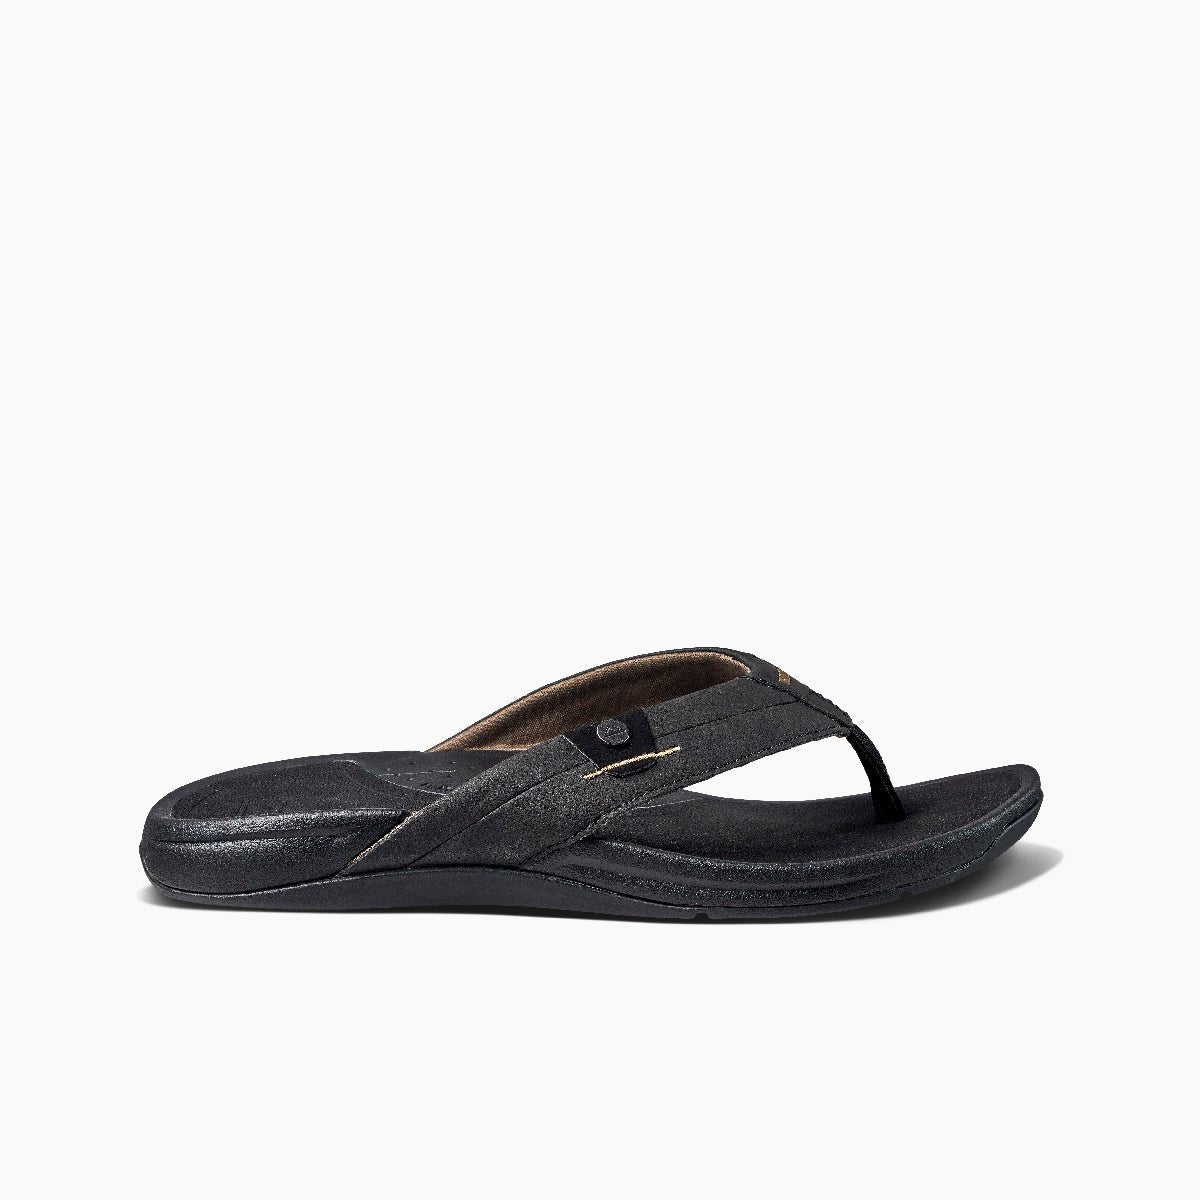 Reef Men's Pacific Flip Flop Sandals - Black/Brown